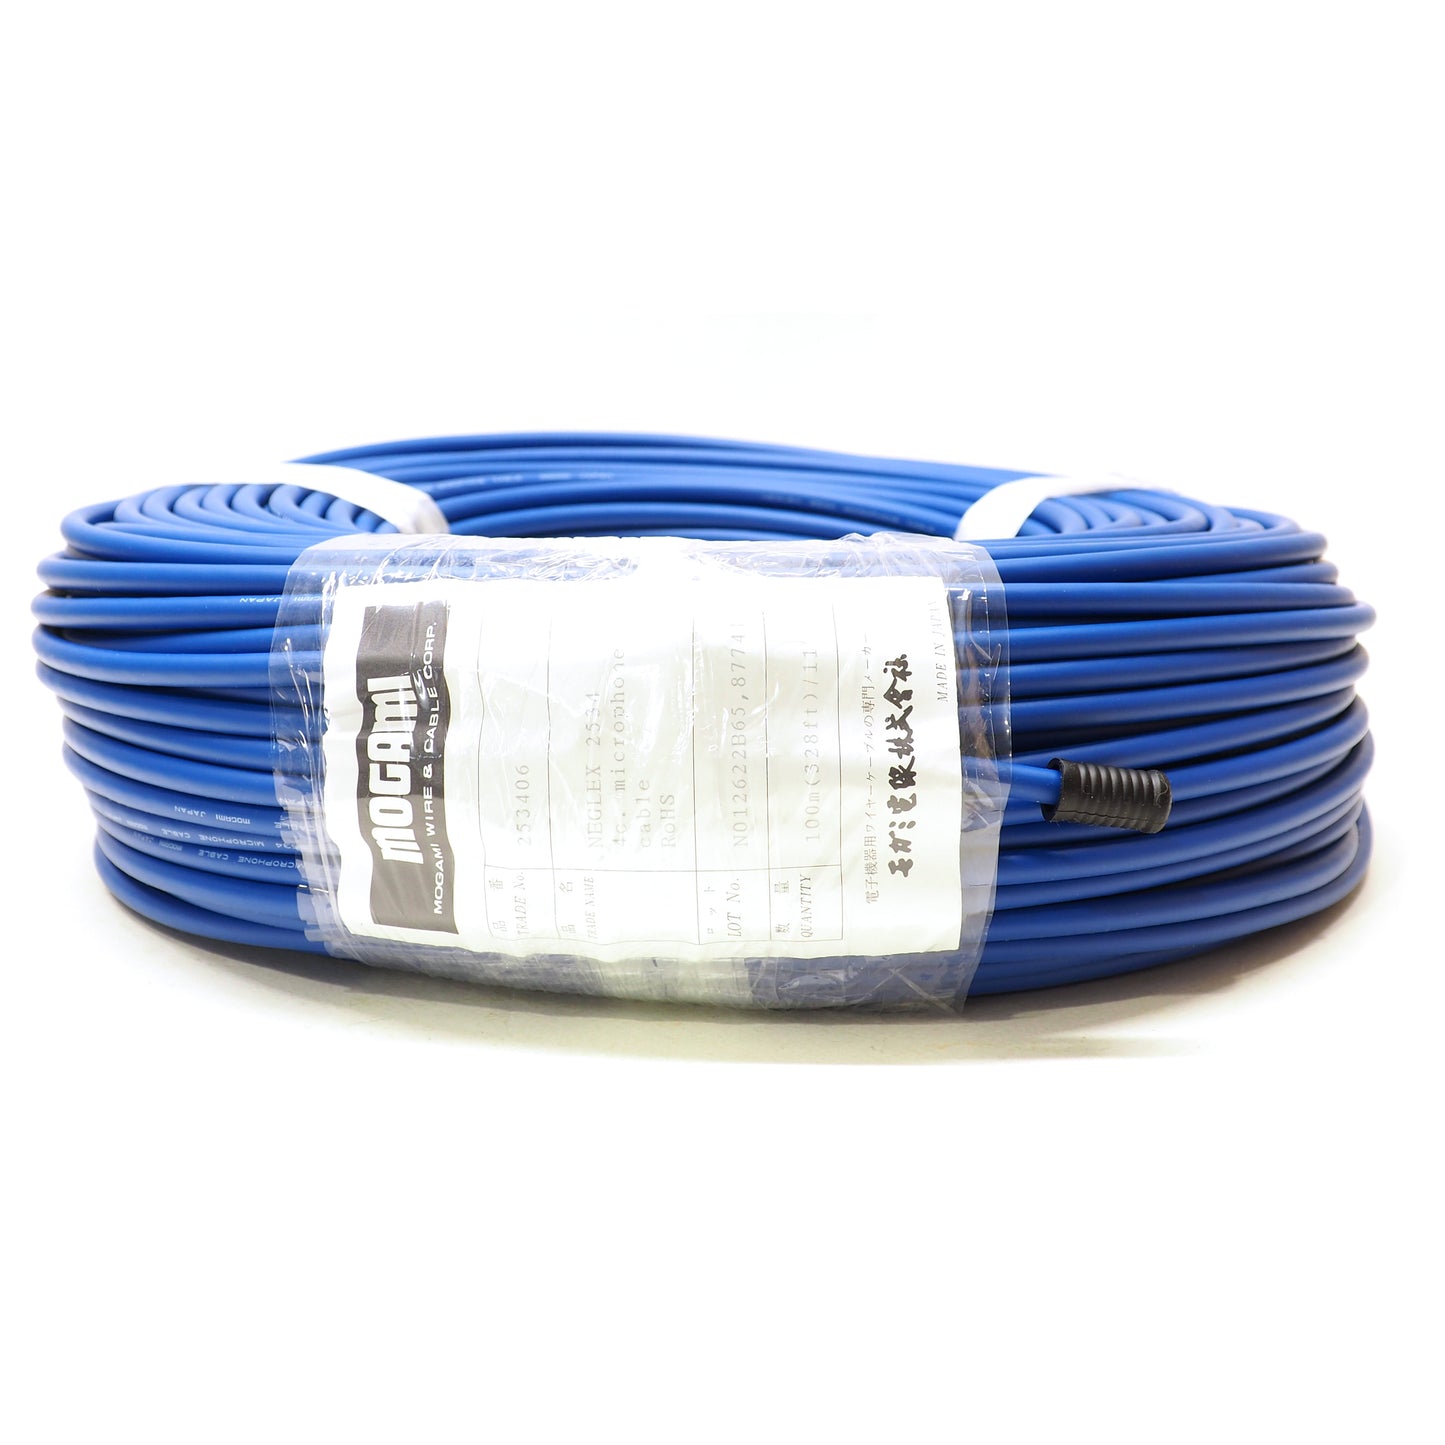 Mogami 2534 - Quad Balanced Cable (Blue Color)